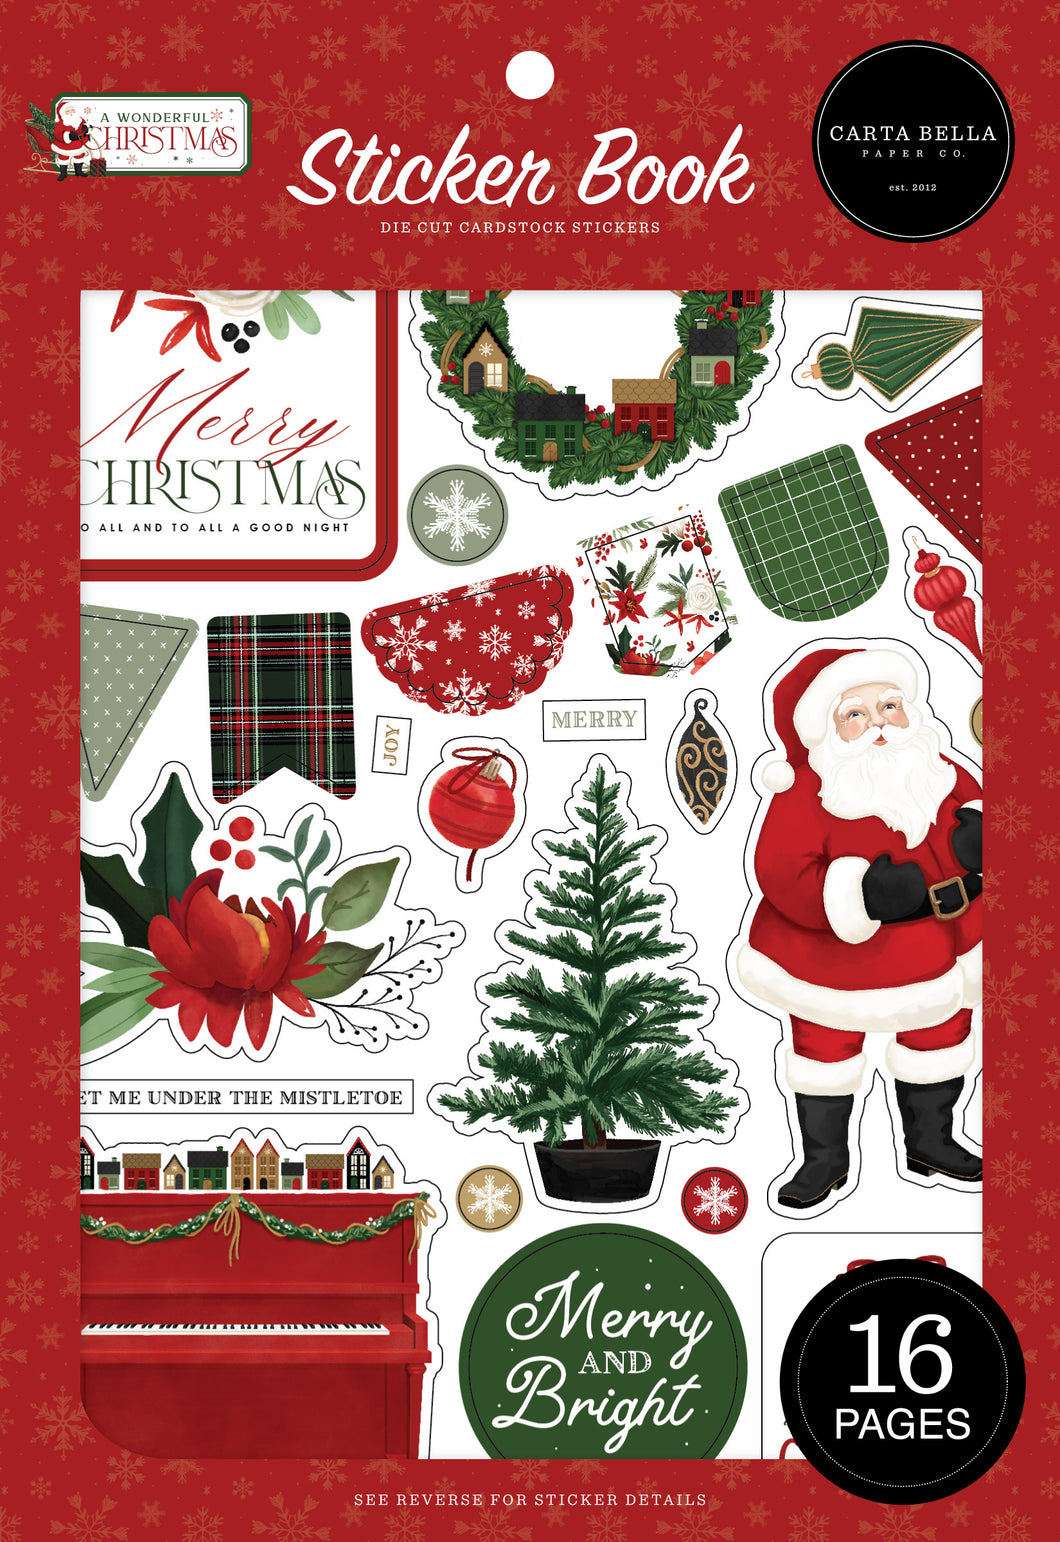 CARTA BELLA A WONDERFUL CHRISTMAS Sticker book 328029